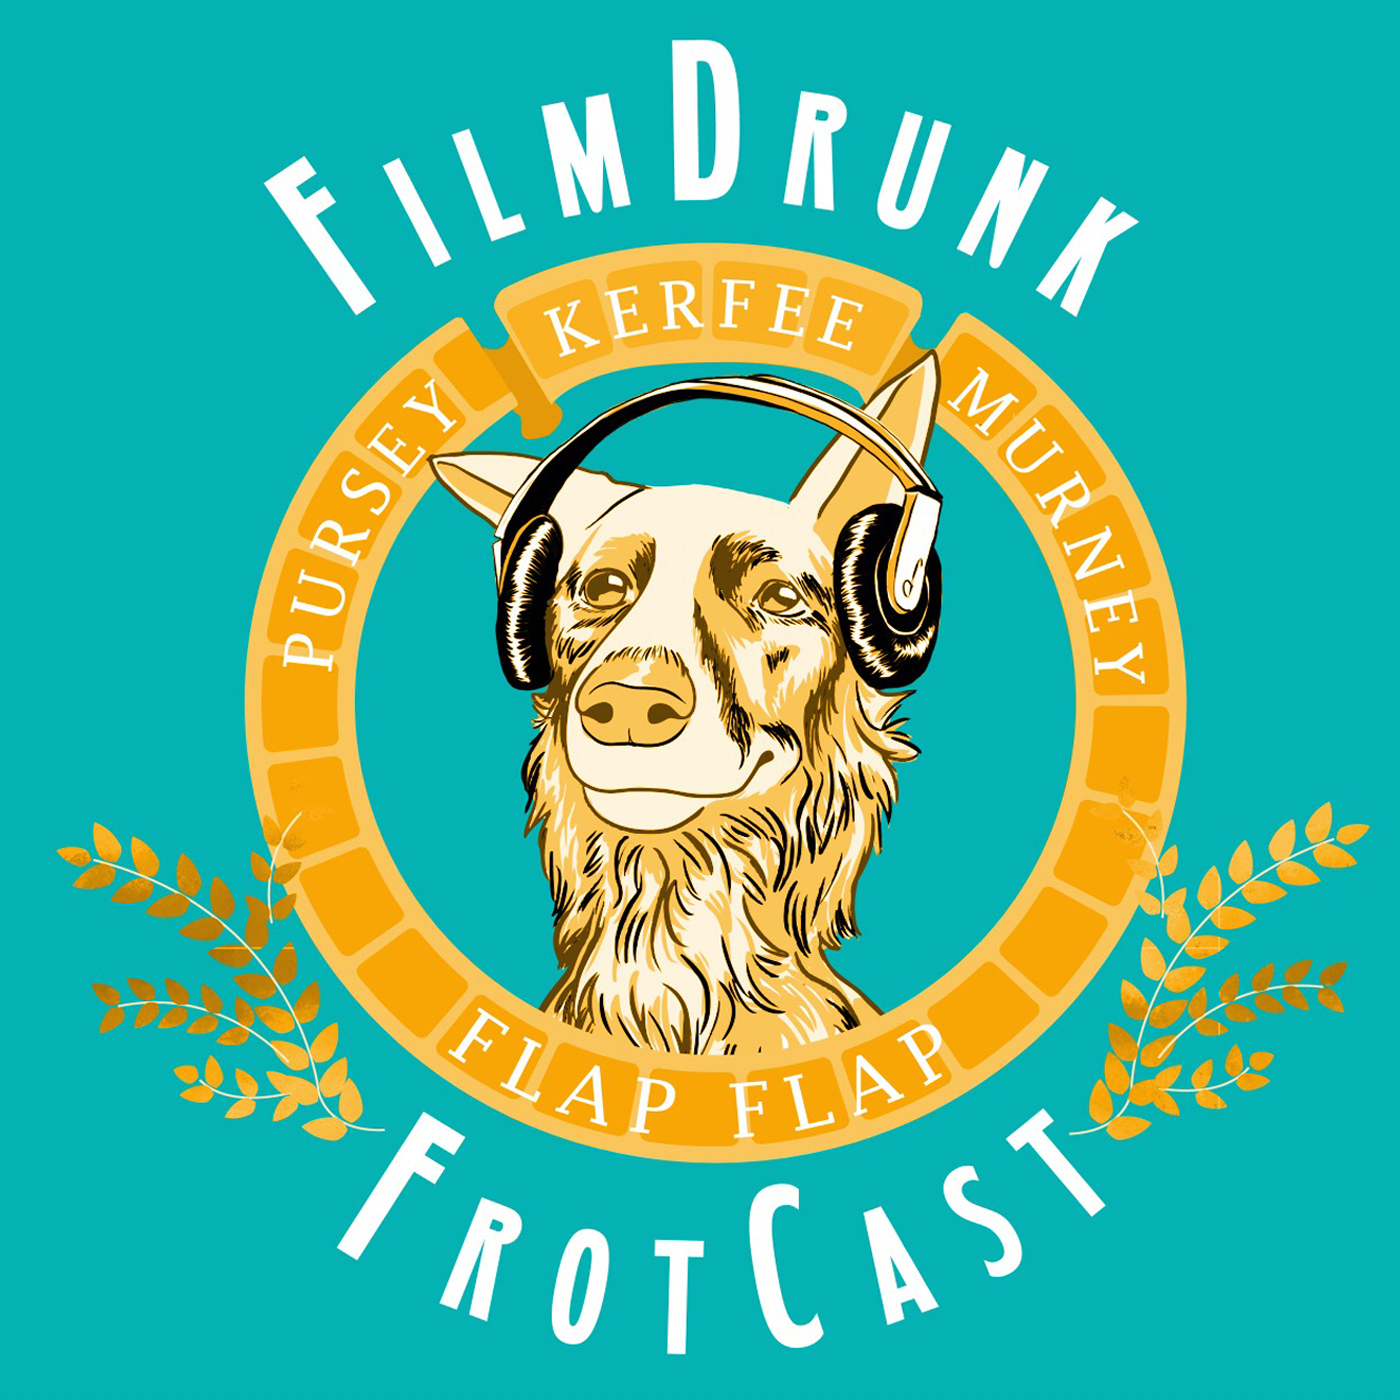 FilmDrunk Frotcast